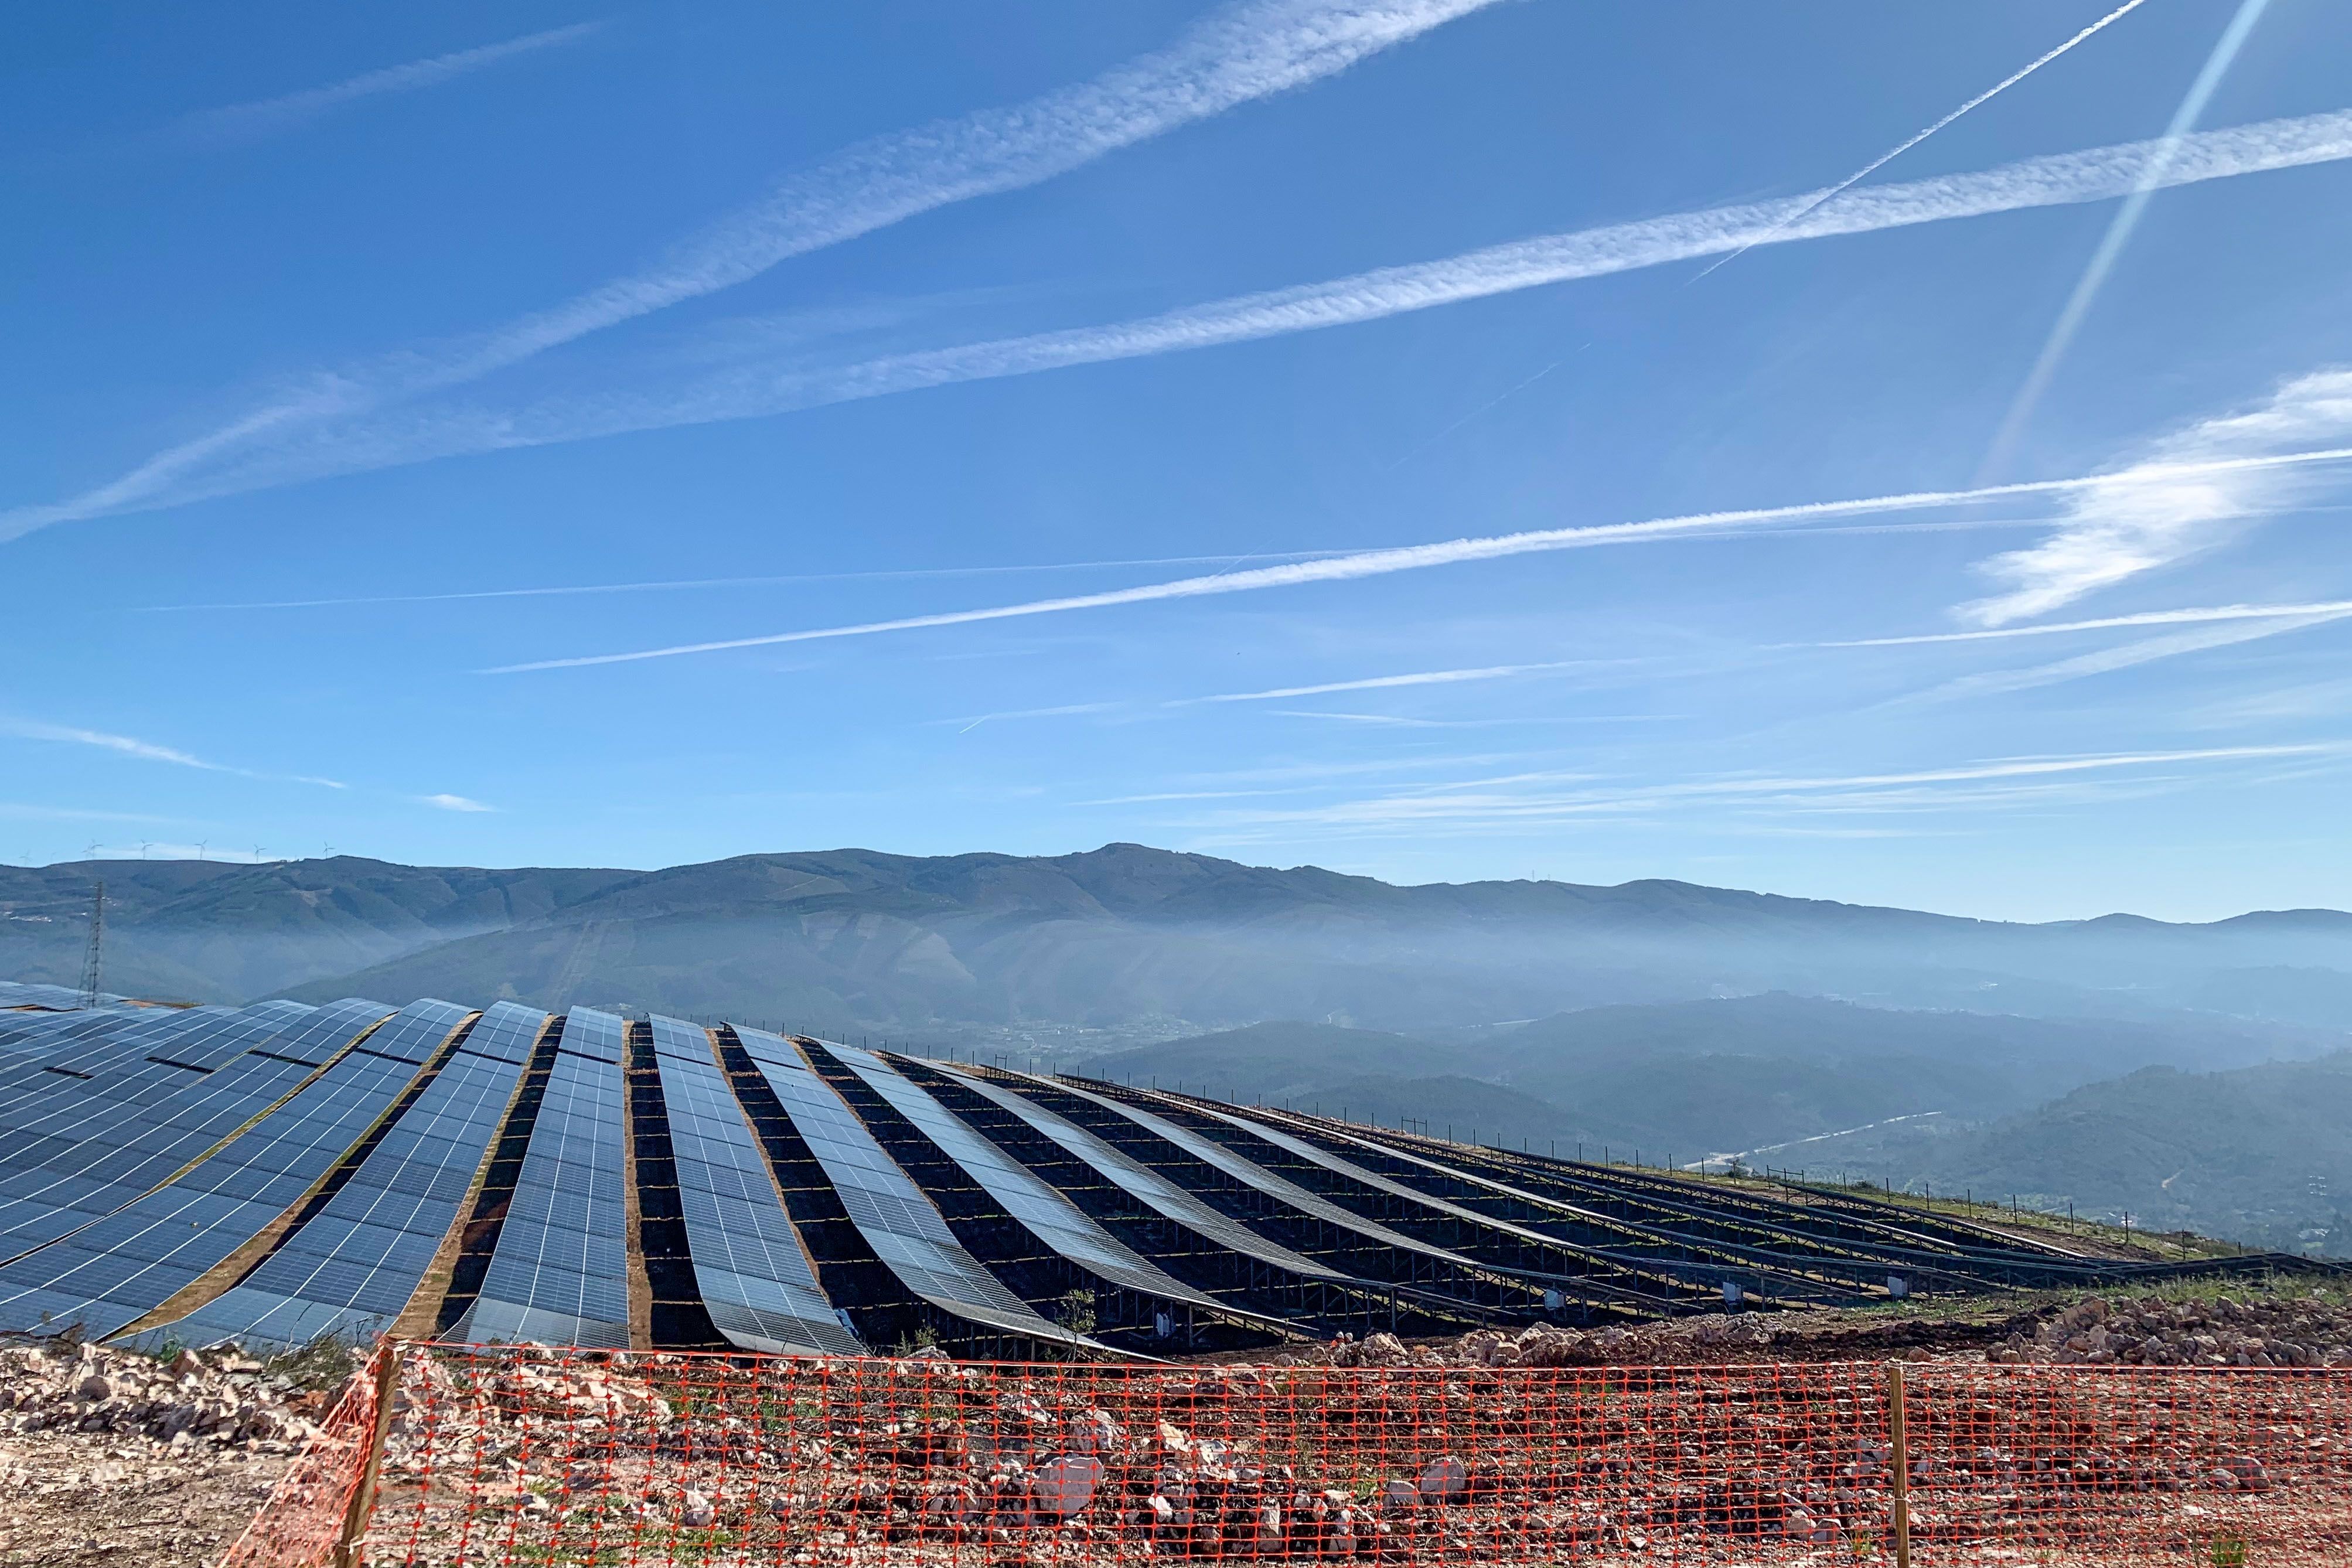 Plaka fotovoltaikoen parke bat, Portugalen. PAULA FERNANDEZ / EFE.